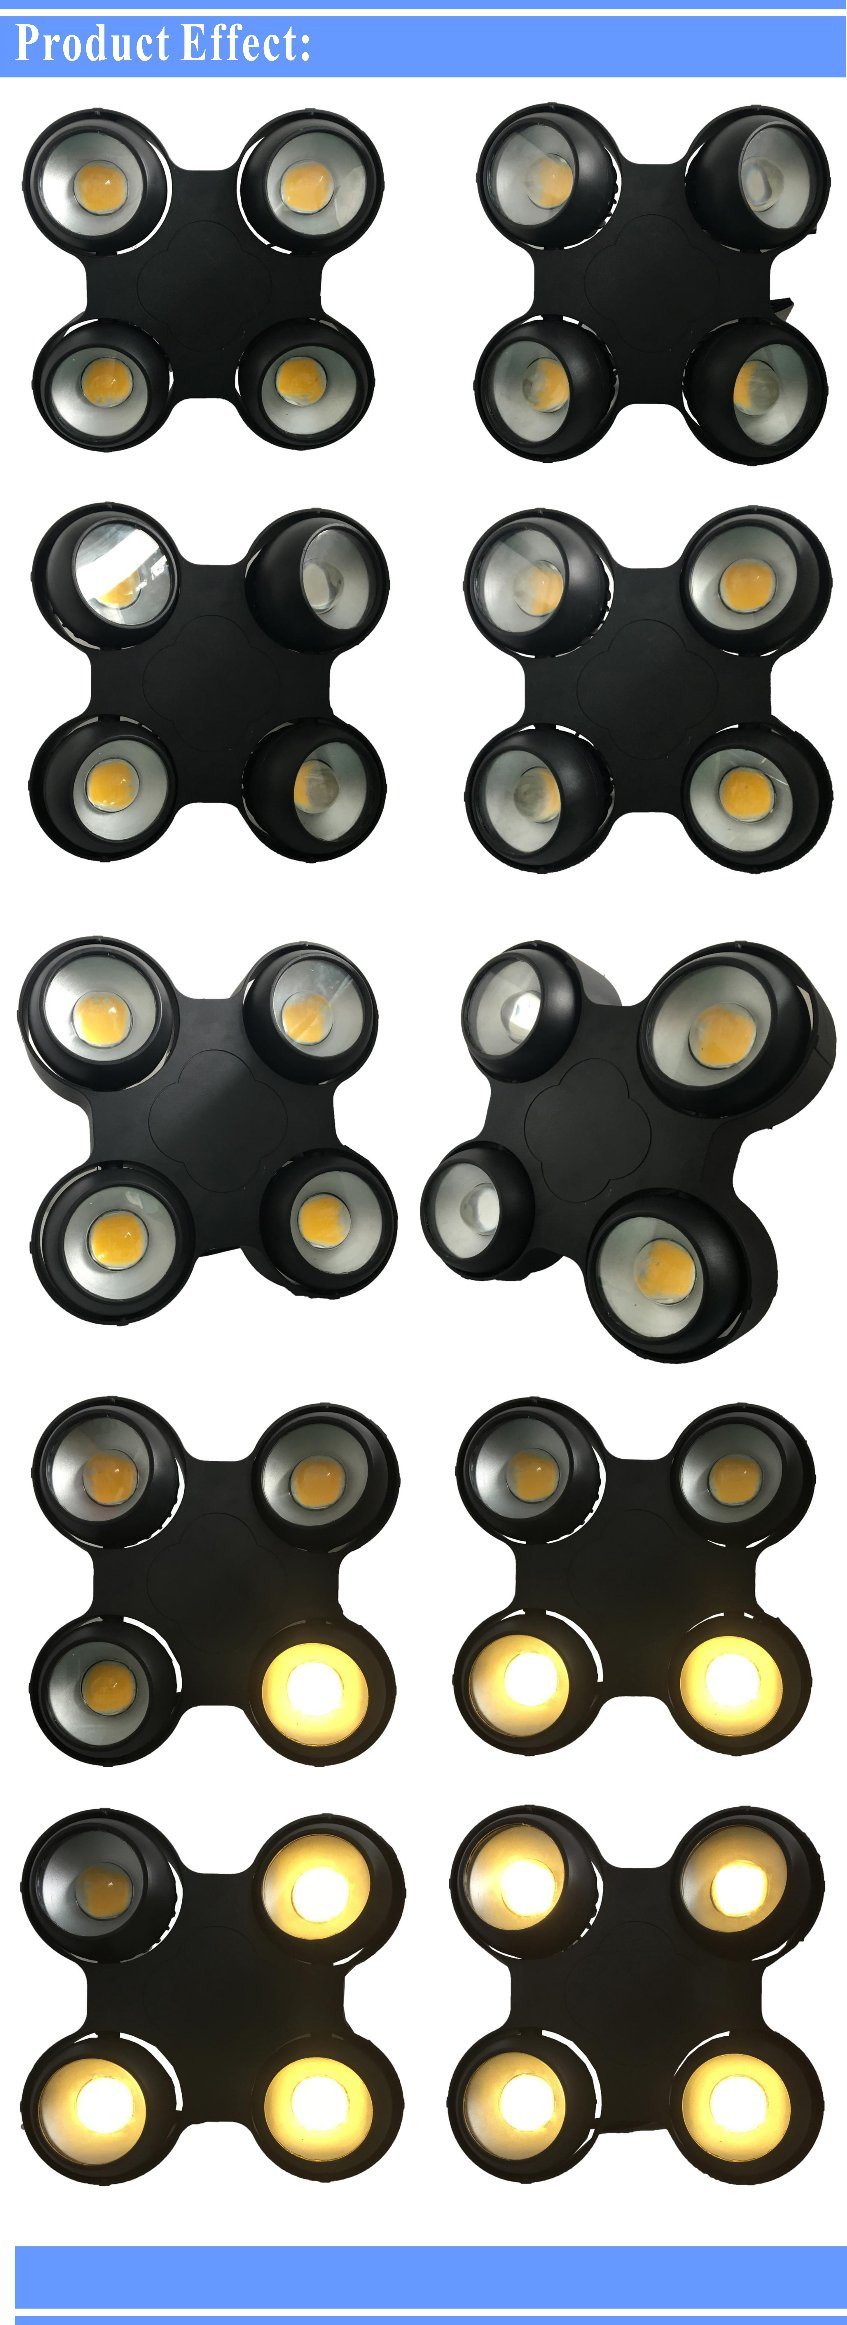 4 Eye 400W Viewer LED Equipment Night Club Waterproof Stage Lights